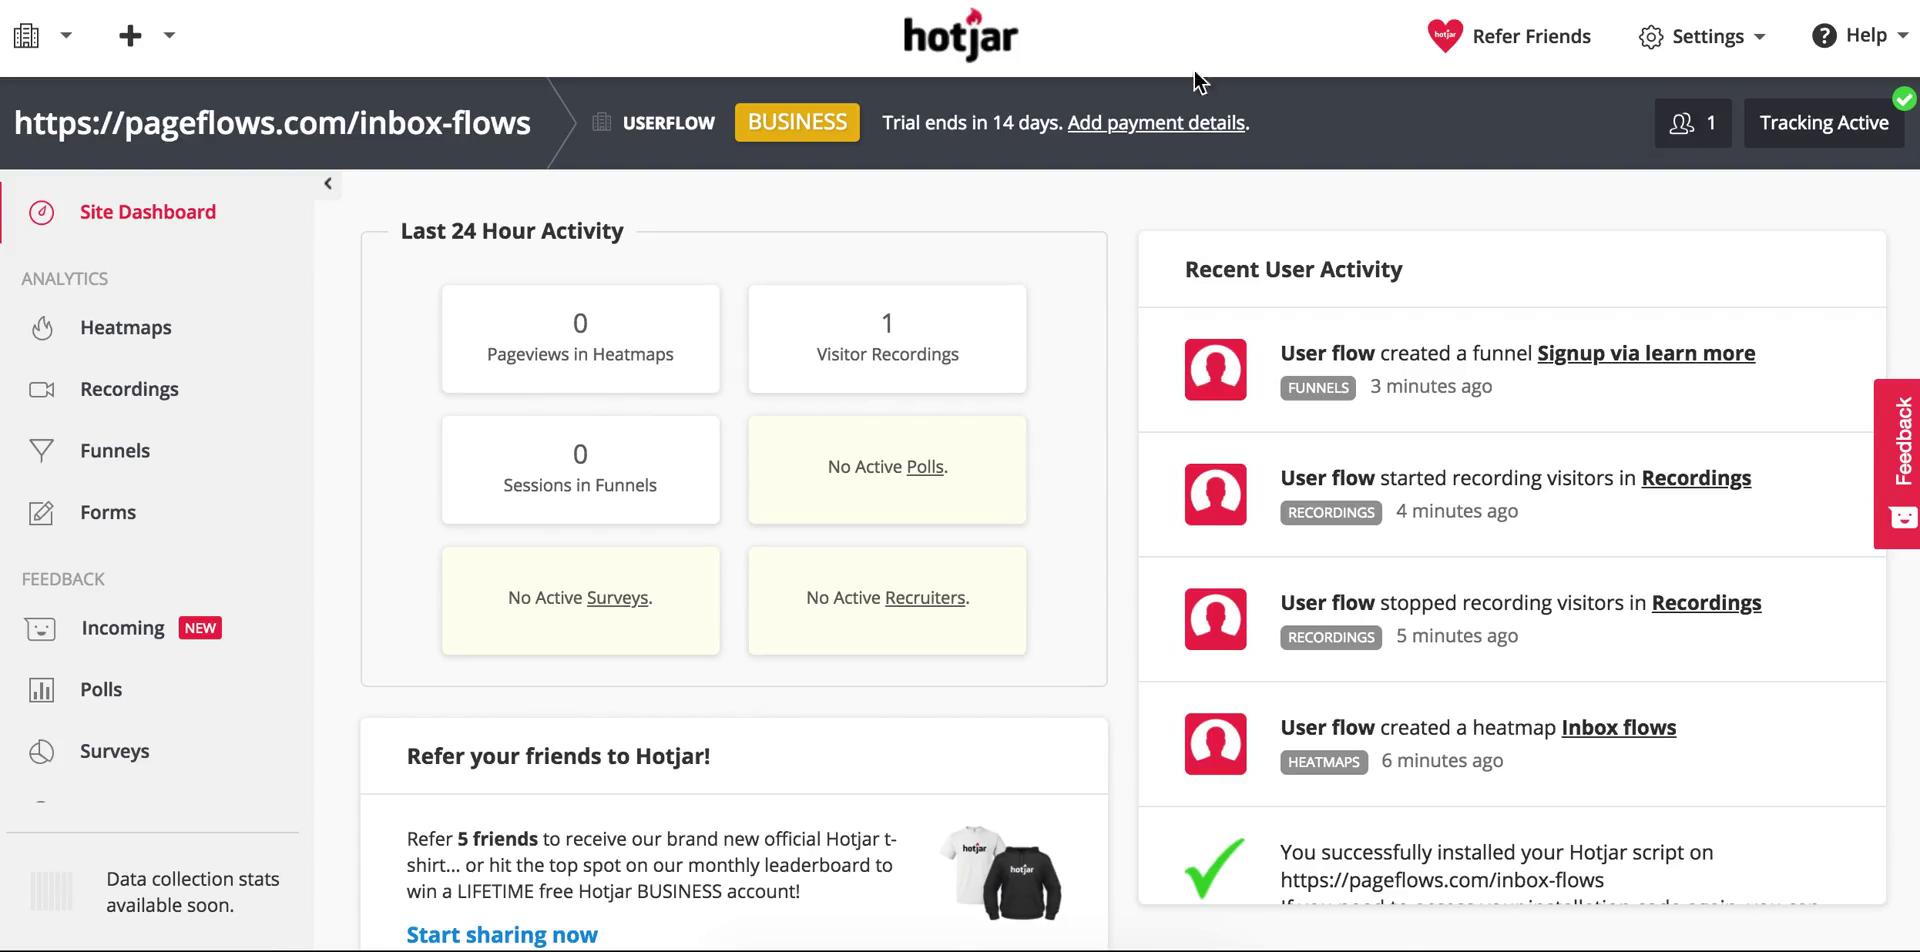 Adding payment details on Hotjar video screenshot